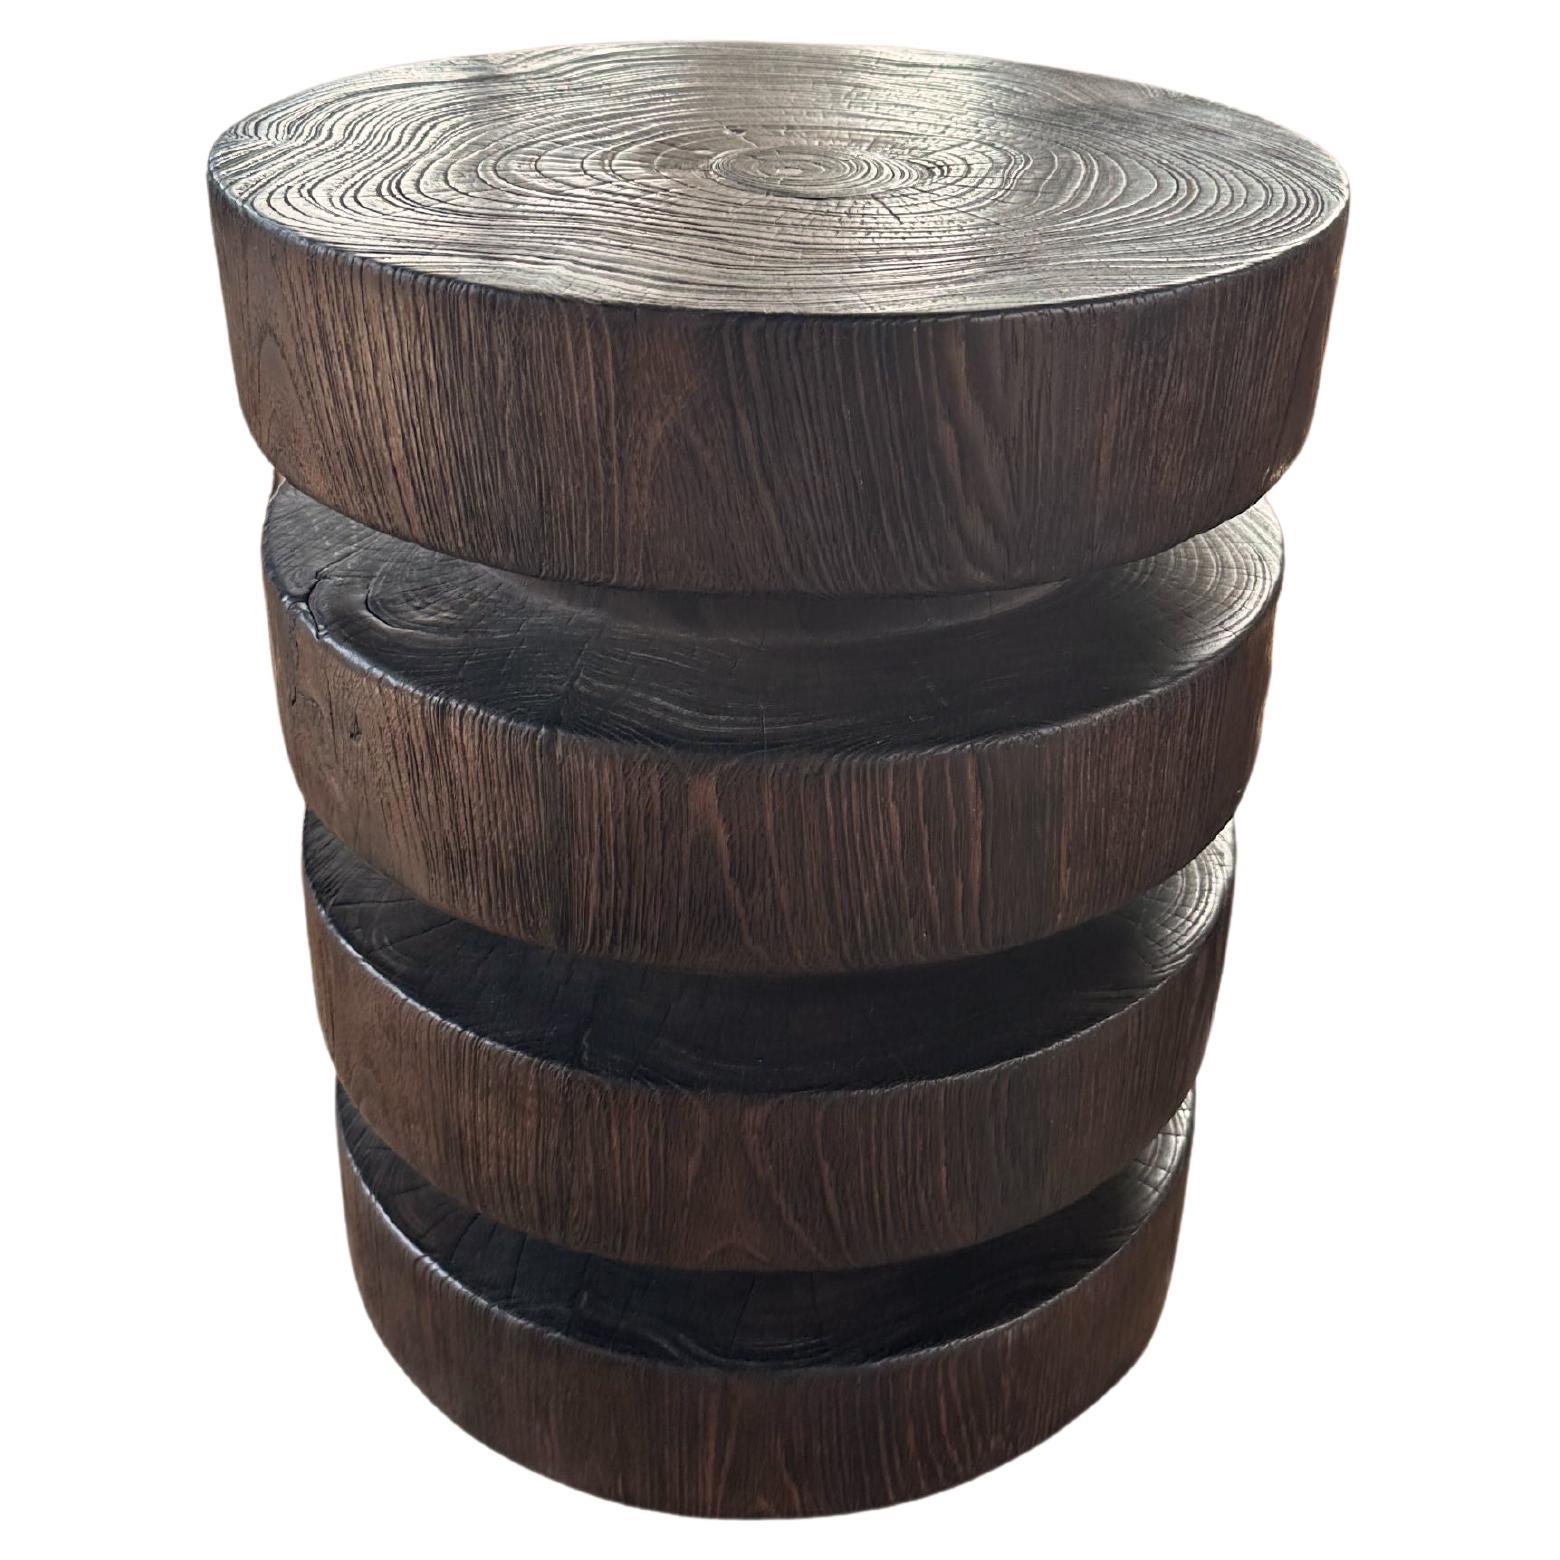 Round Teak Wood Side Table, Burnt Finish, Layered Design, Modern Organic For Sale